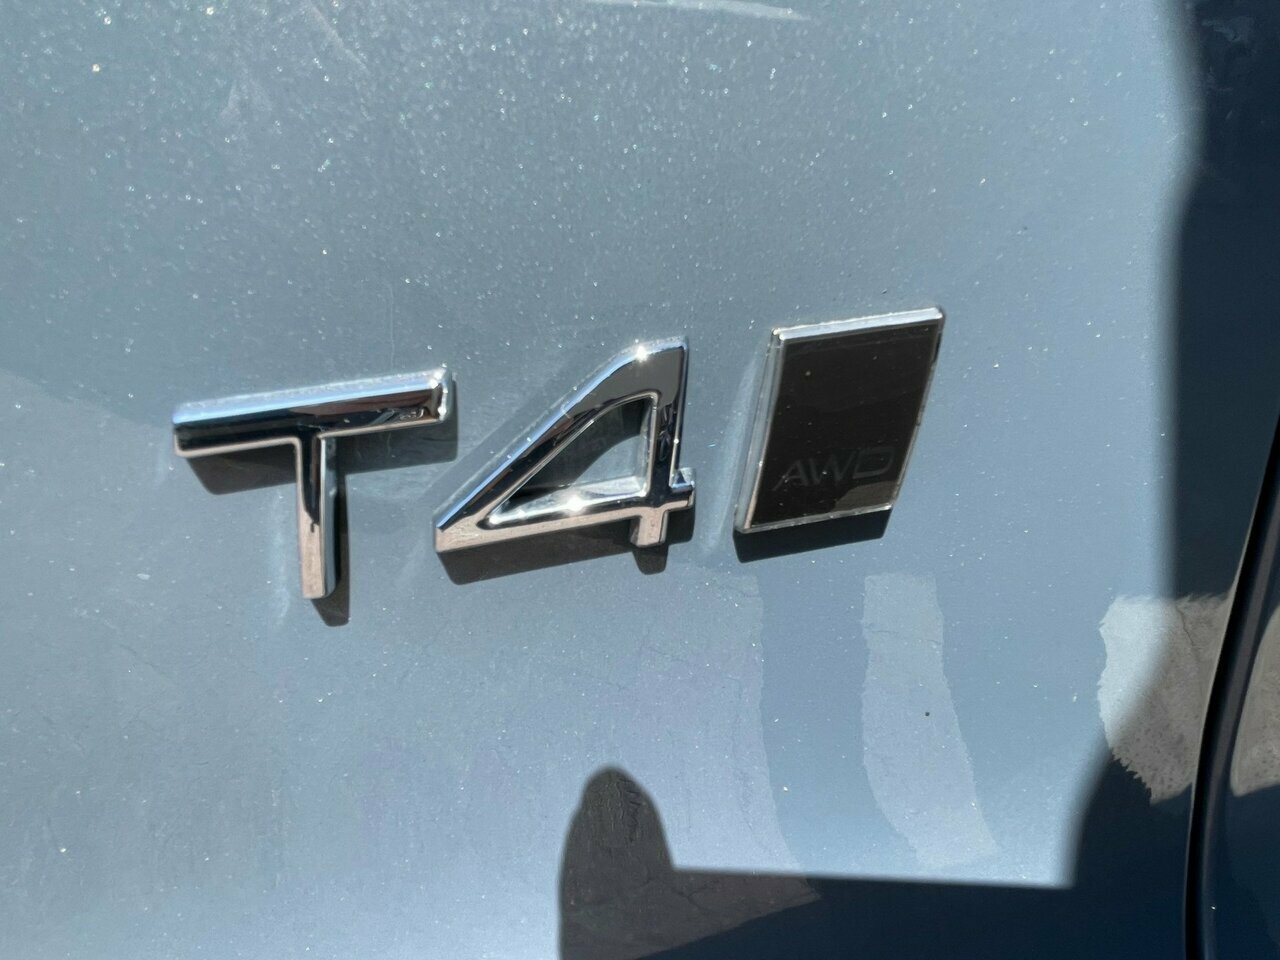 2020 MY21 Volvo XC40 536 MY21 T4 Inscription (AWD) SUV Image 22